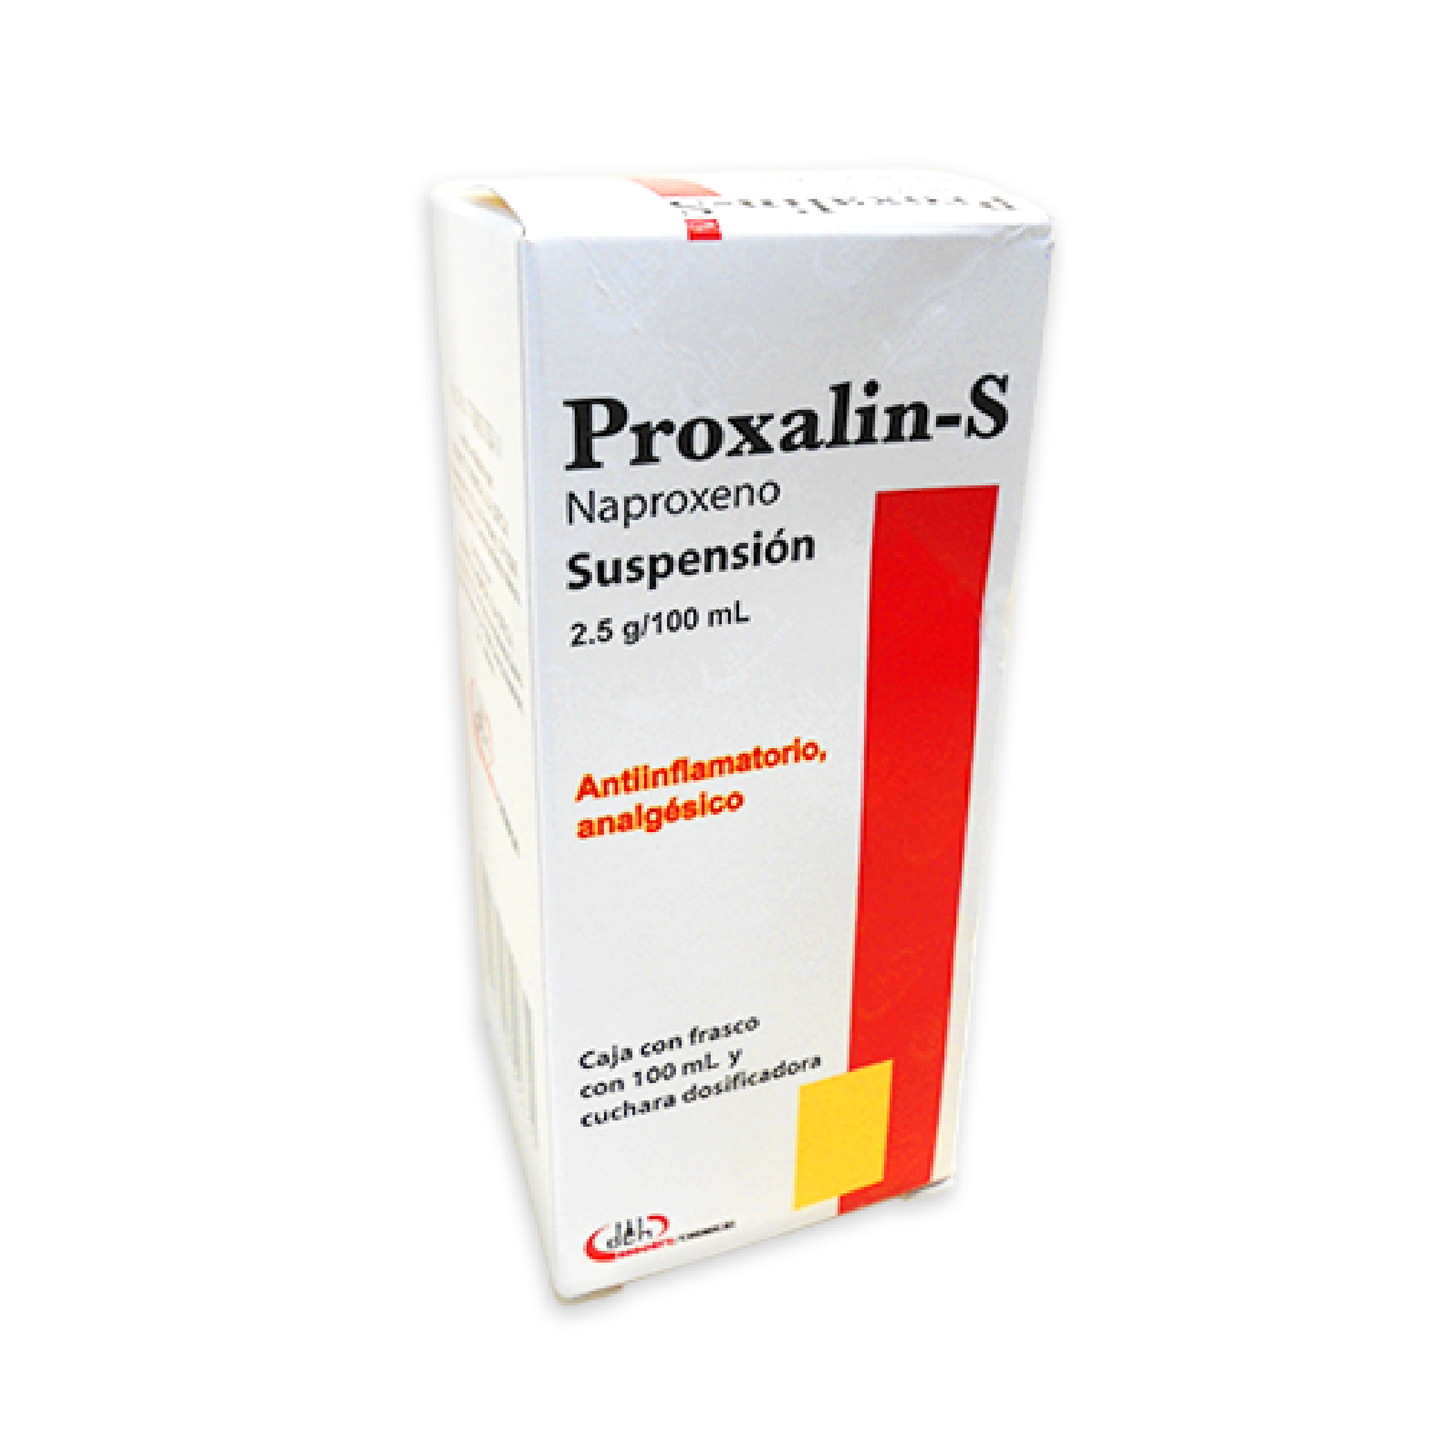 Proxalin-S (Naproxeno) 2.5g/100ml